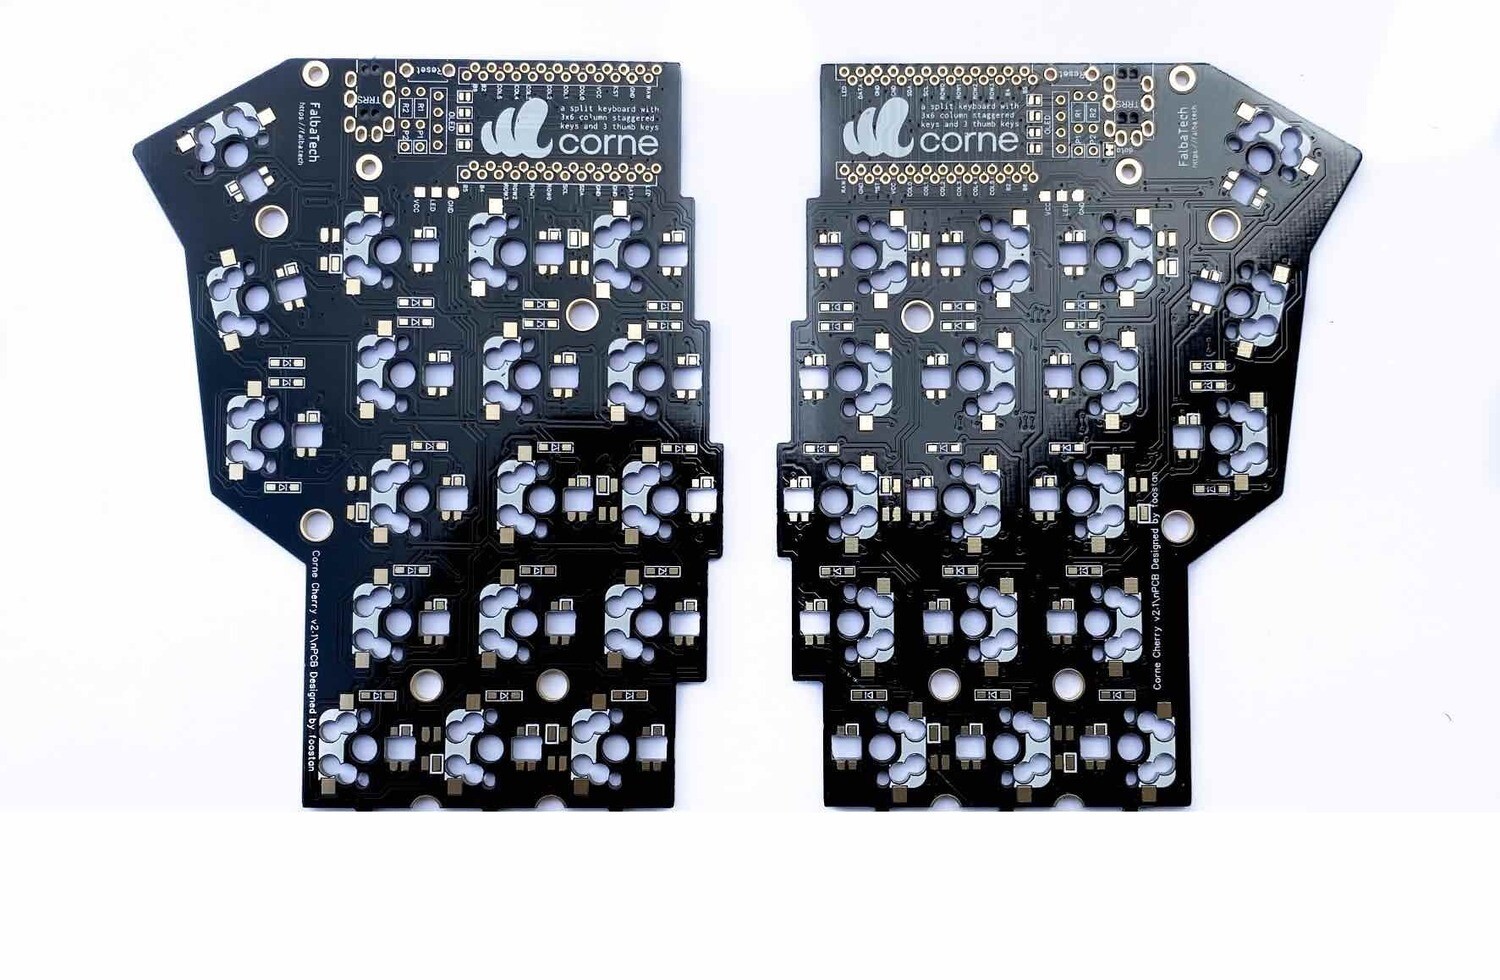 HeliDox Mini (corne mini) PCB Electrical Boards (Set of 2)